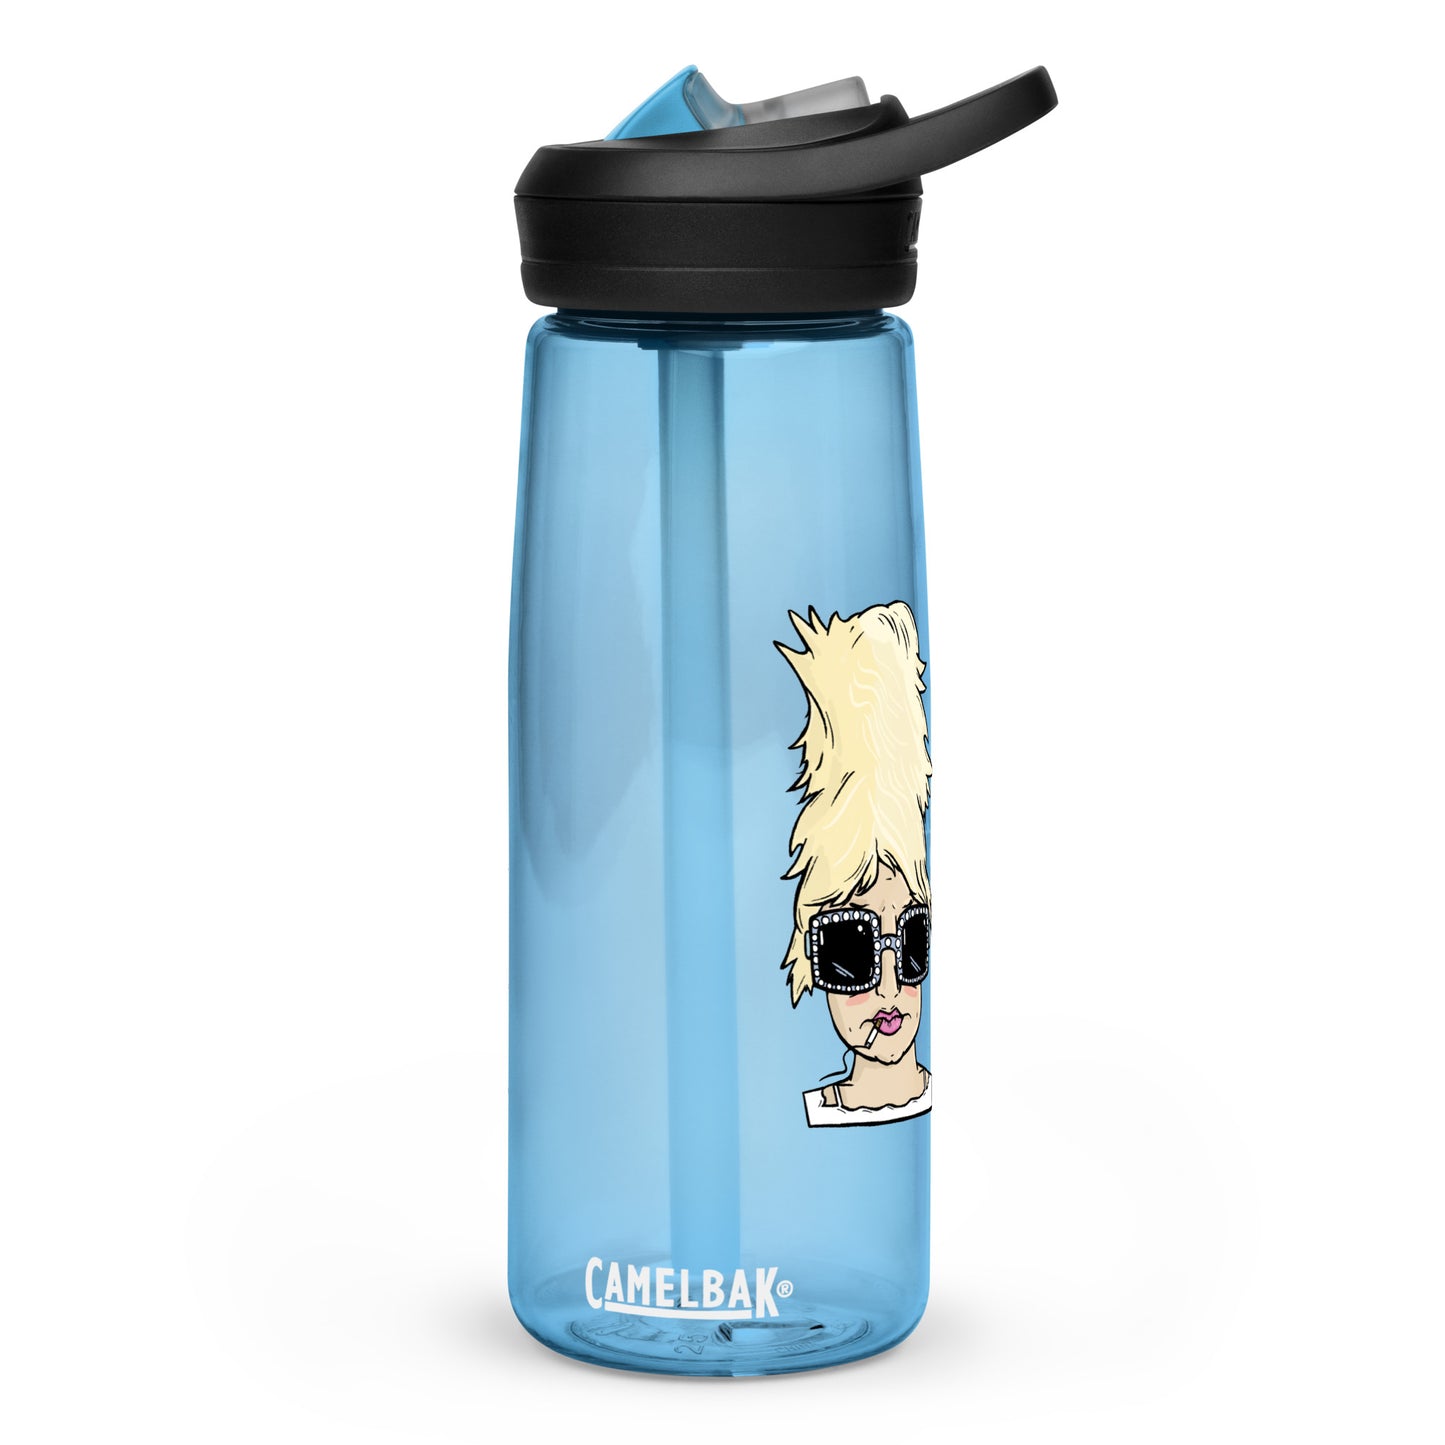 Drink Up Betch | Sports water bottle